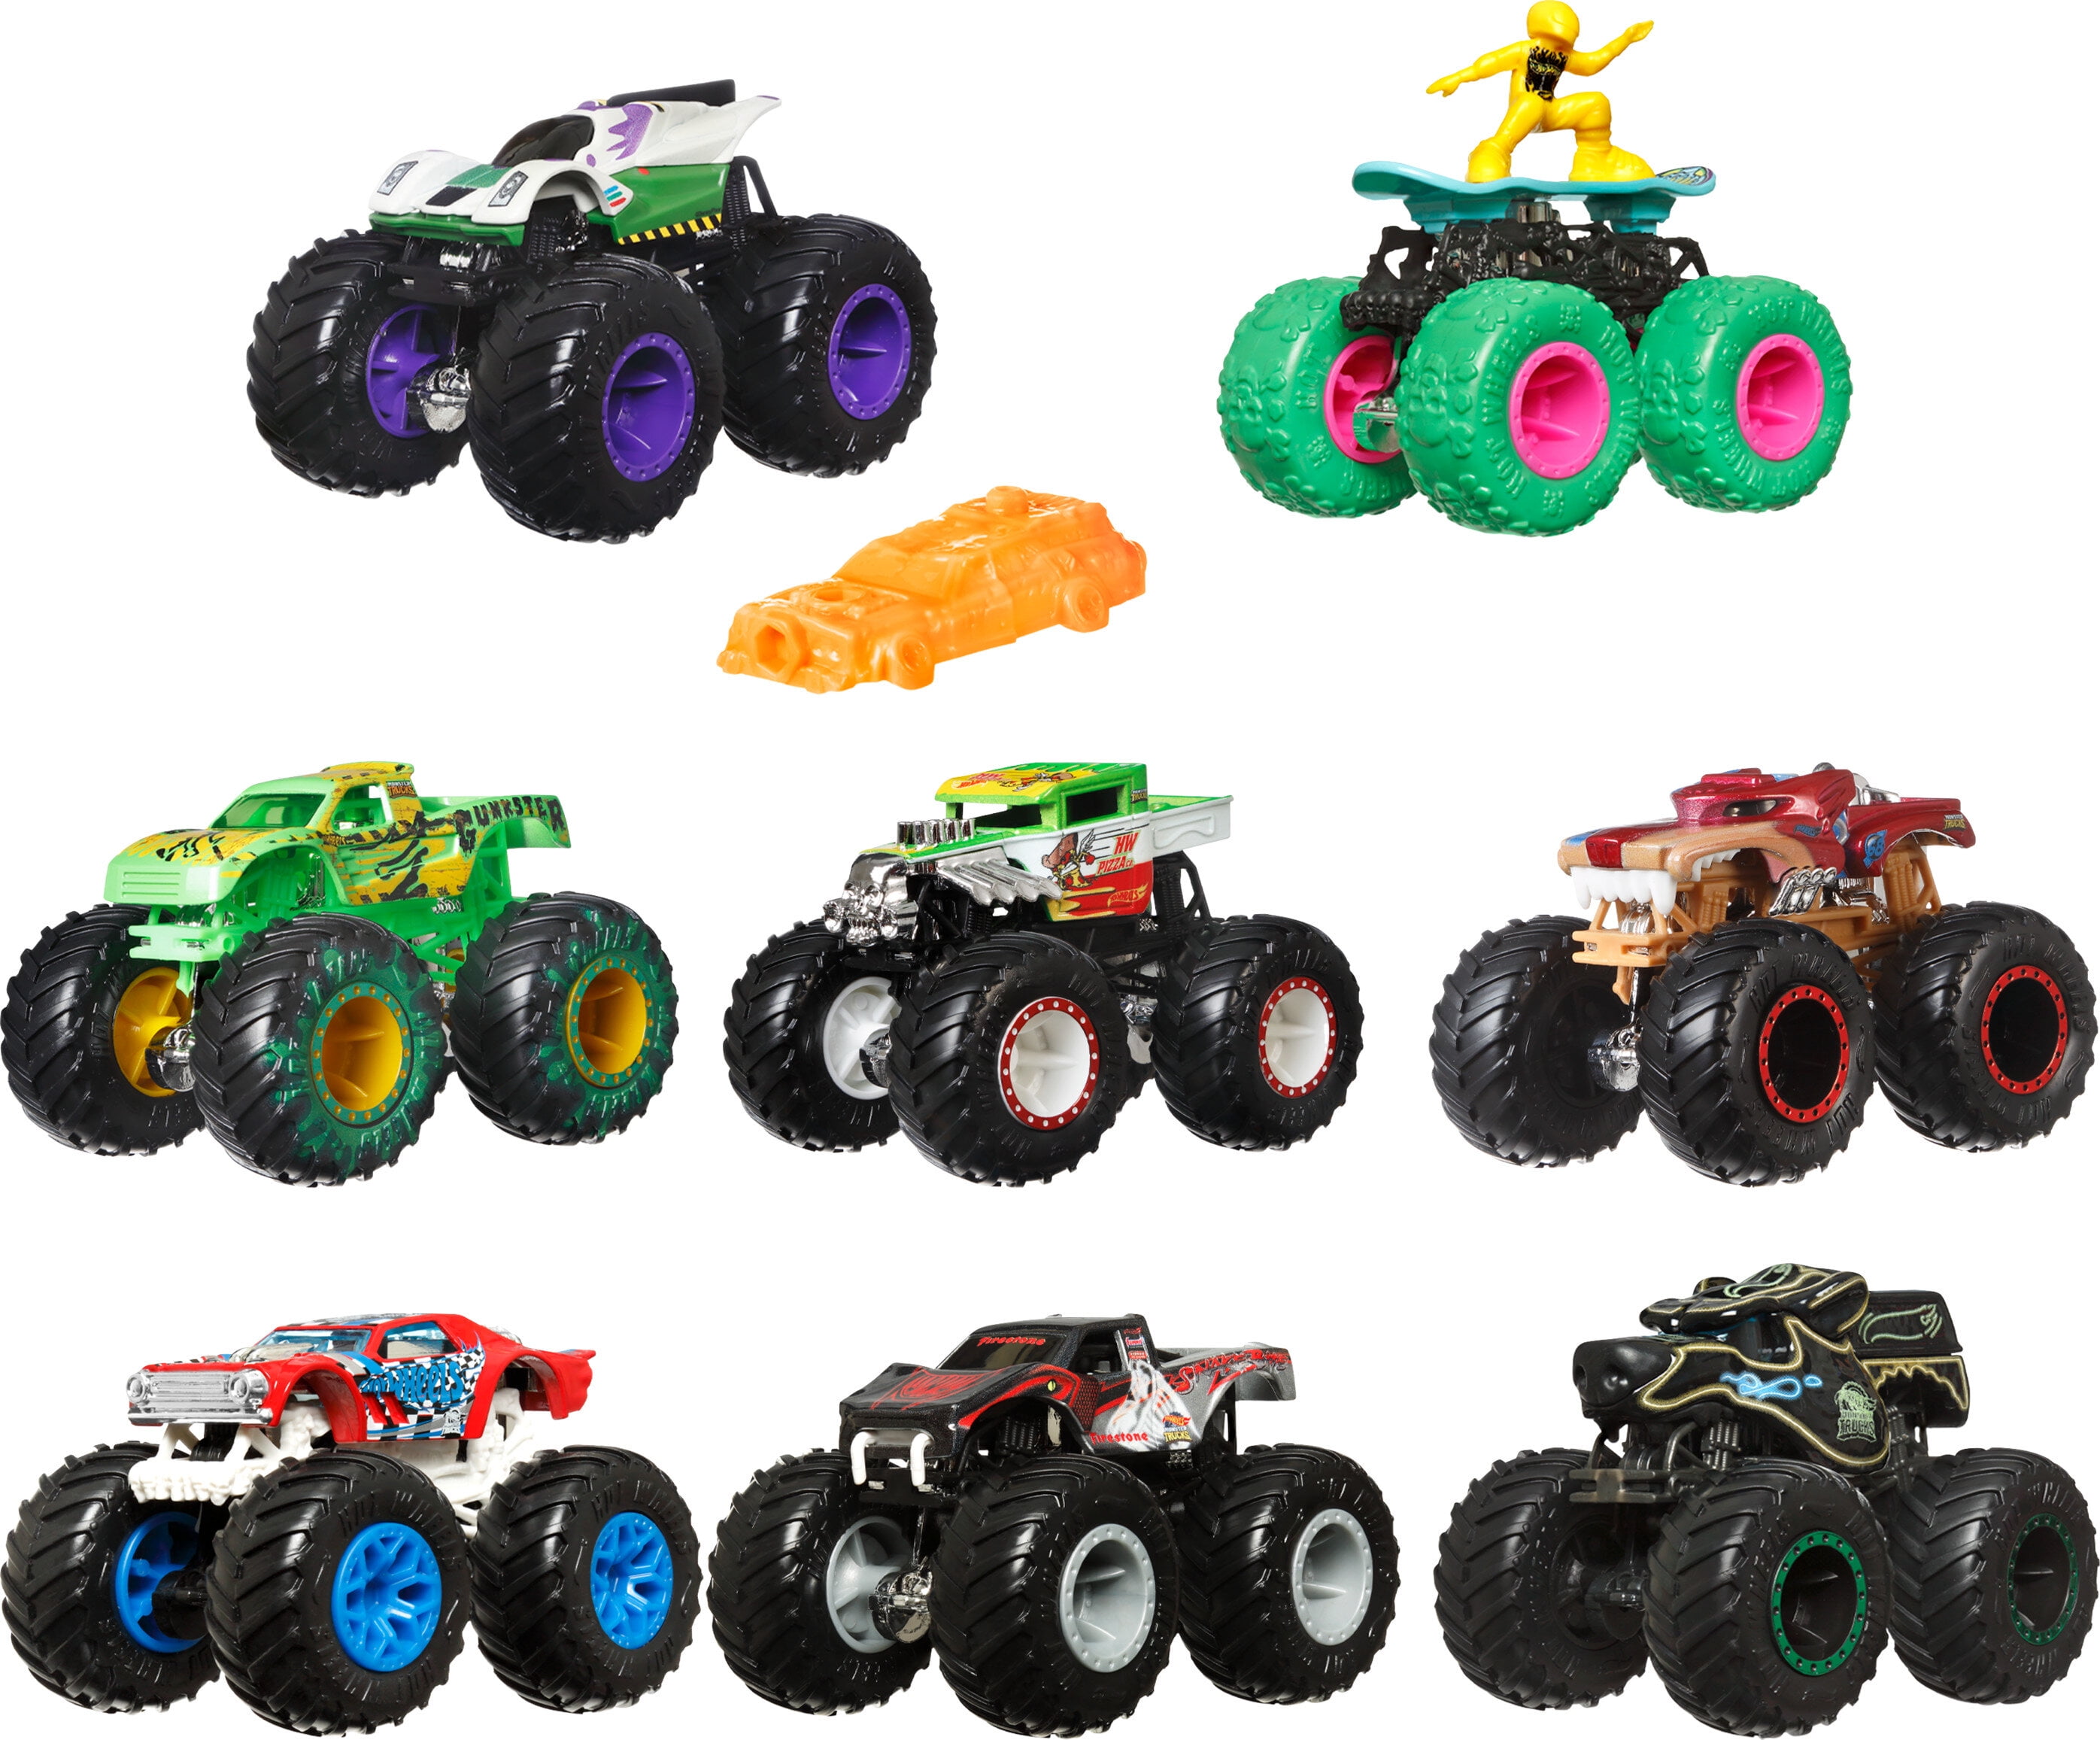 Hot wheels Basic Vehicles Monster Truck 1:64 Multicolor